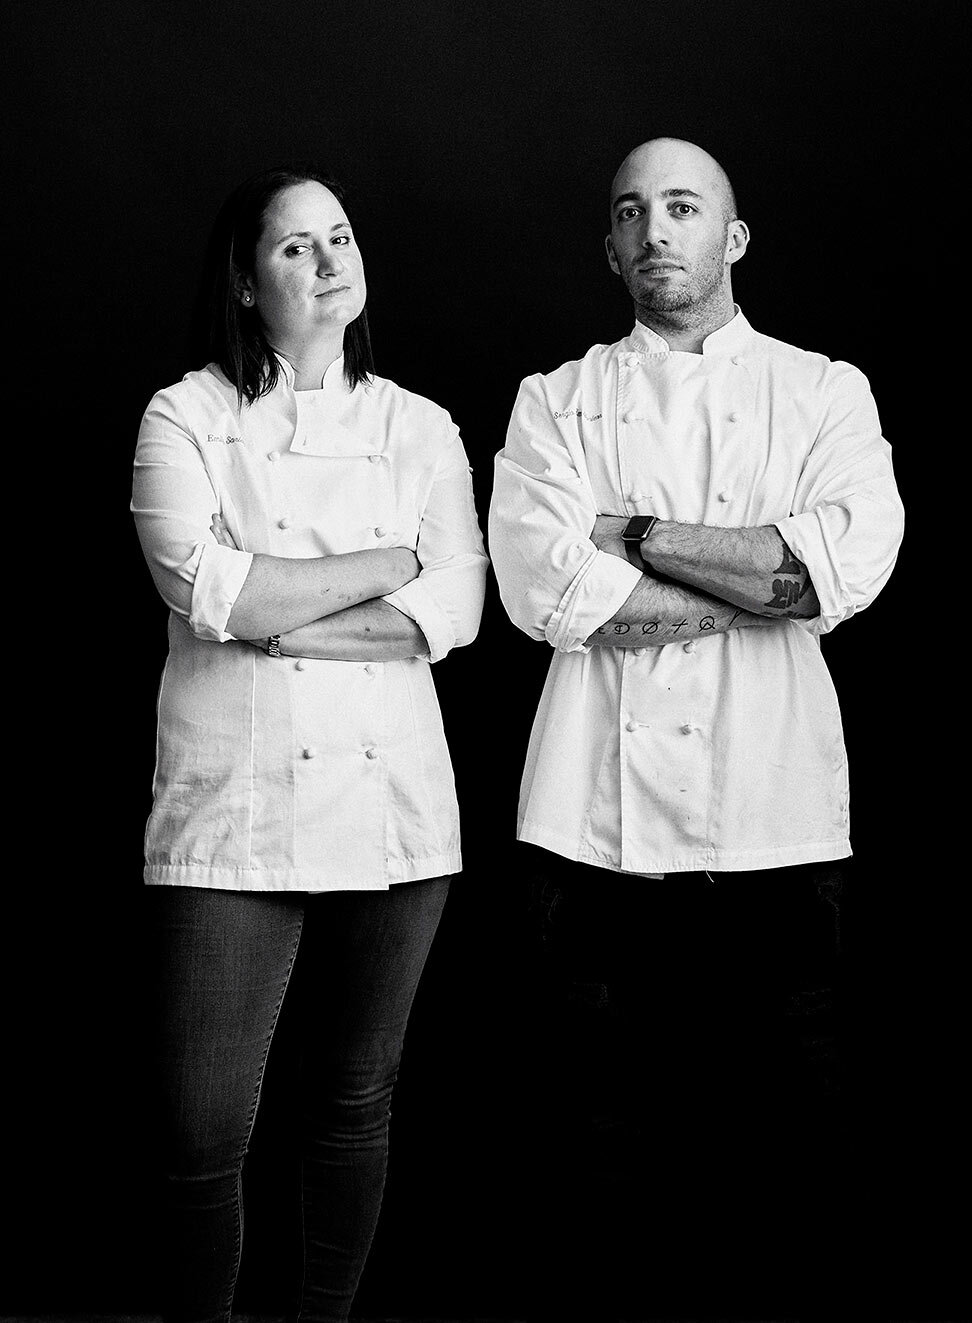 Eva-kolenko-east-bay-cooks-cookbook-chef-portrait-Sergiomonleon-emilysarlatte-alcala-3254.jpg